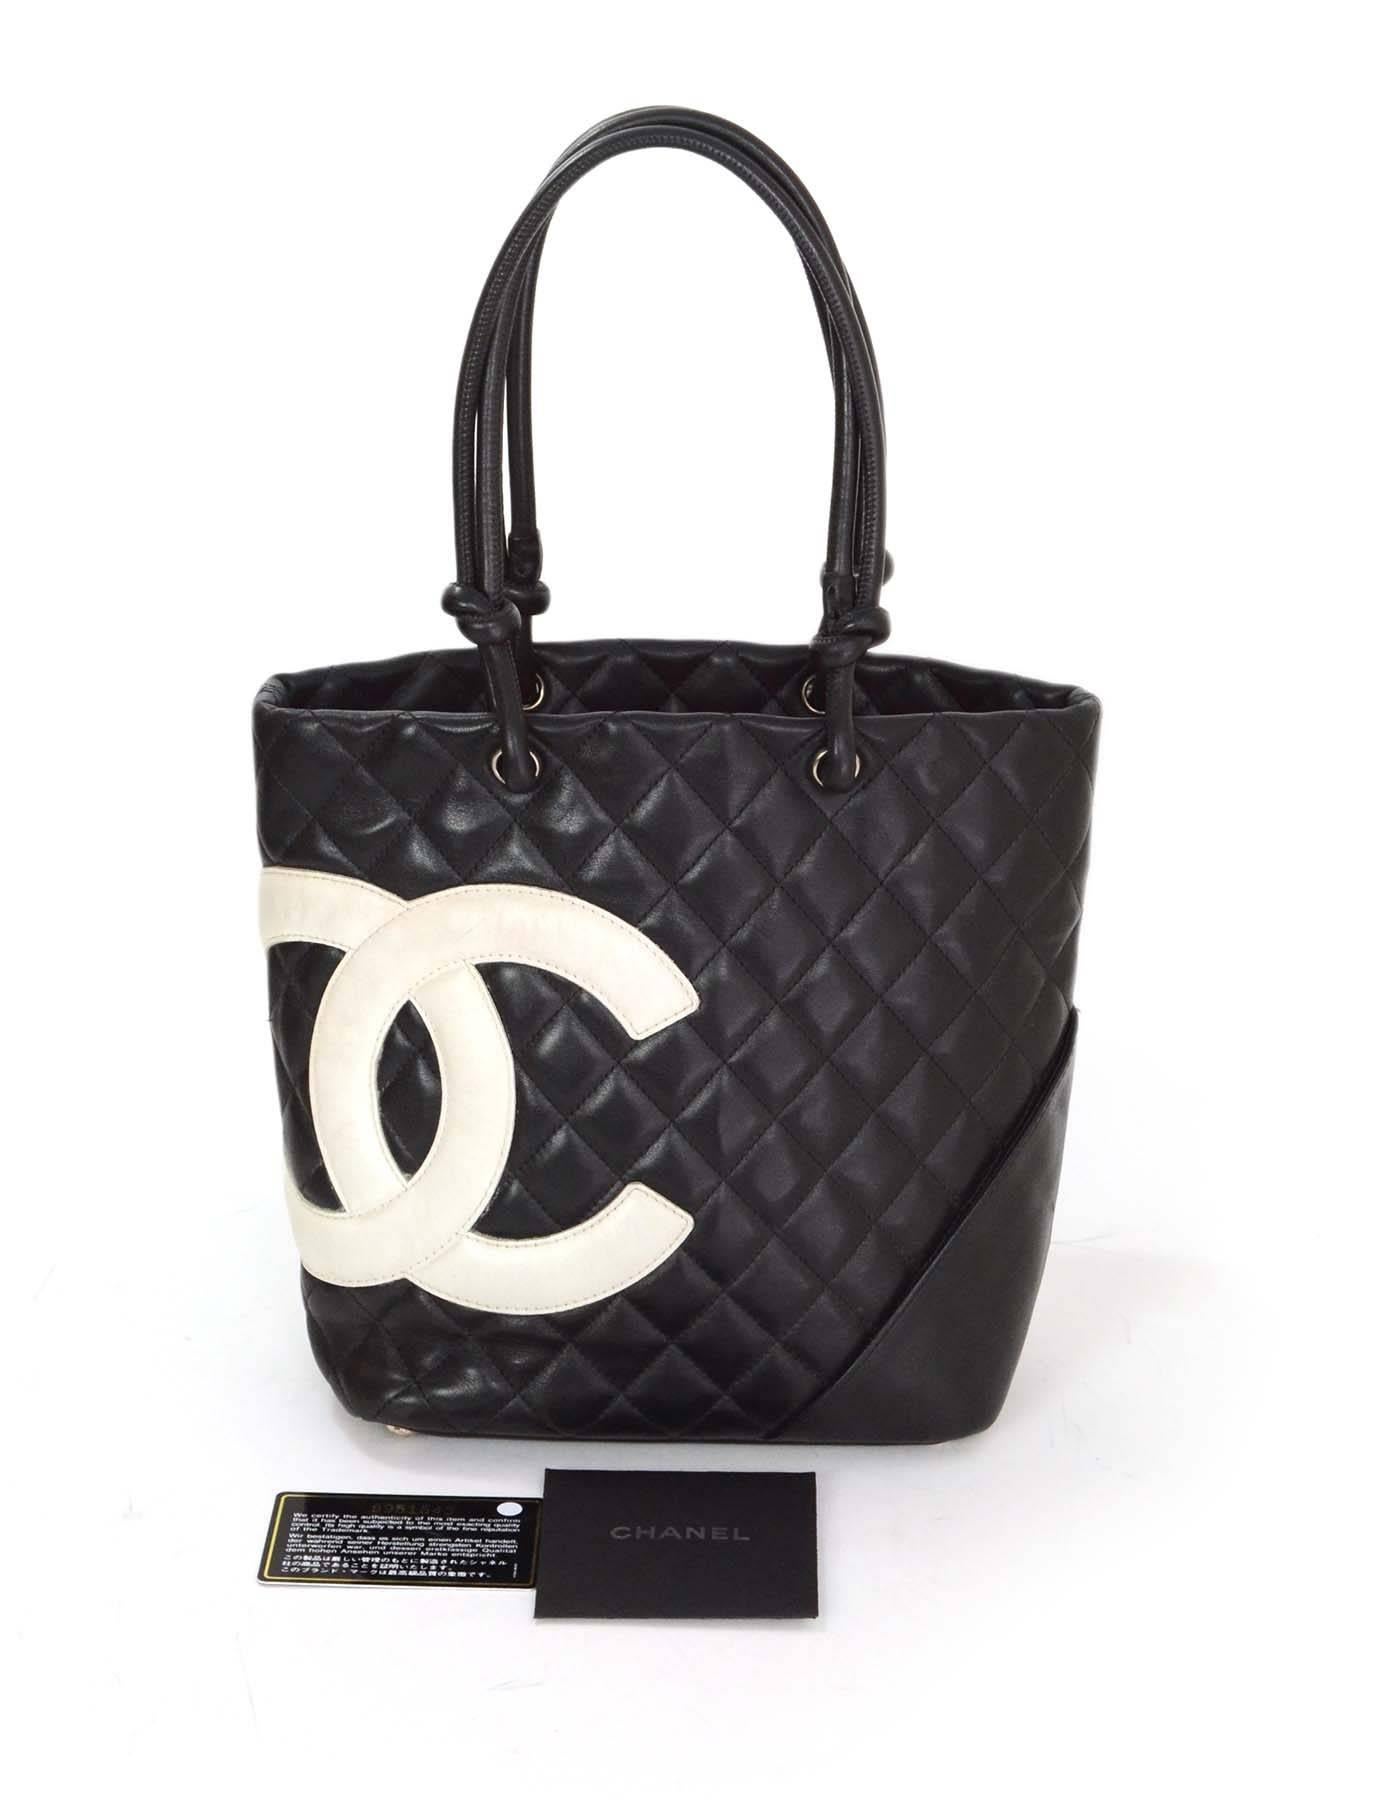 Chanel Black & White Leather Cambon Tote Bag SHW 5